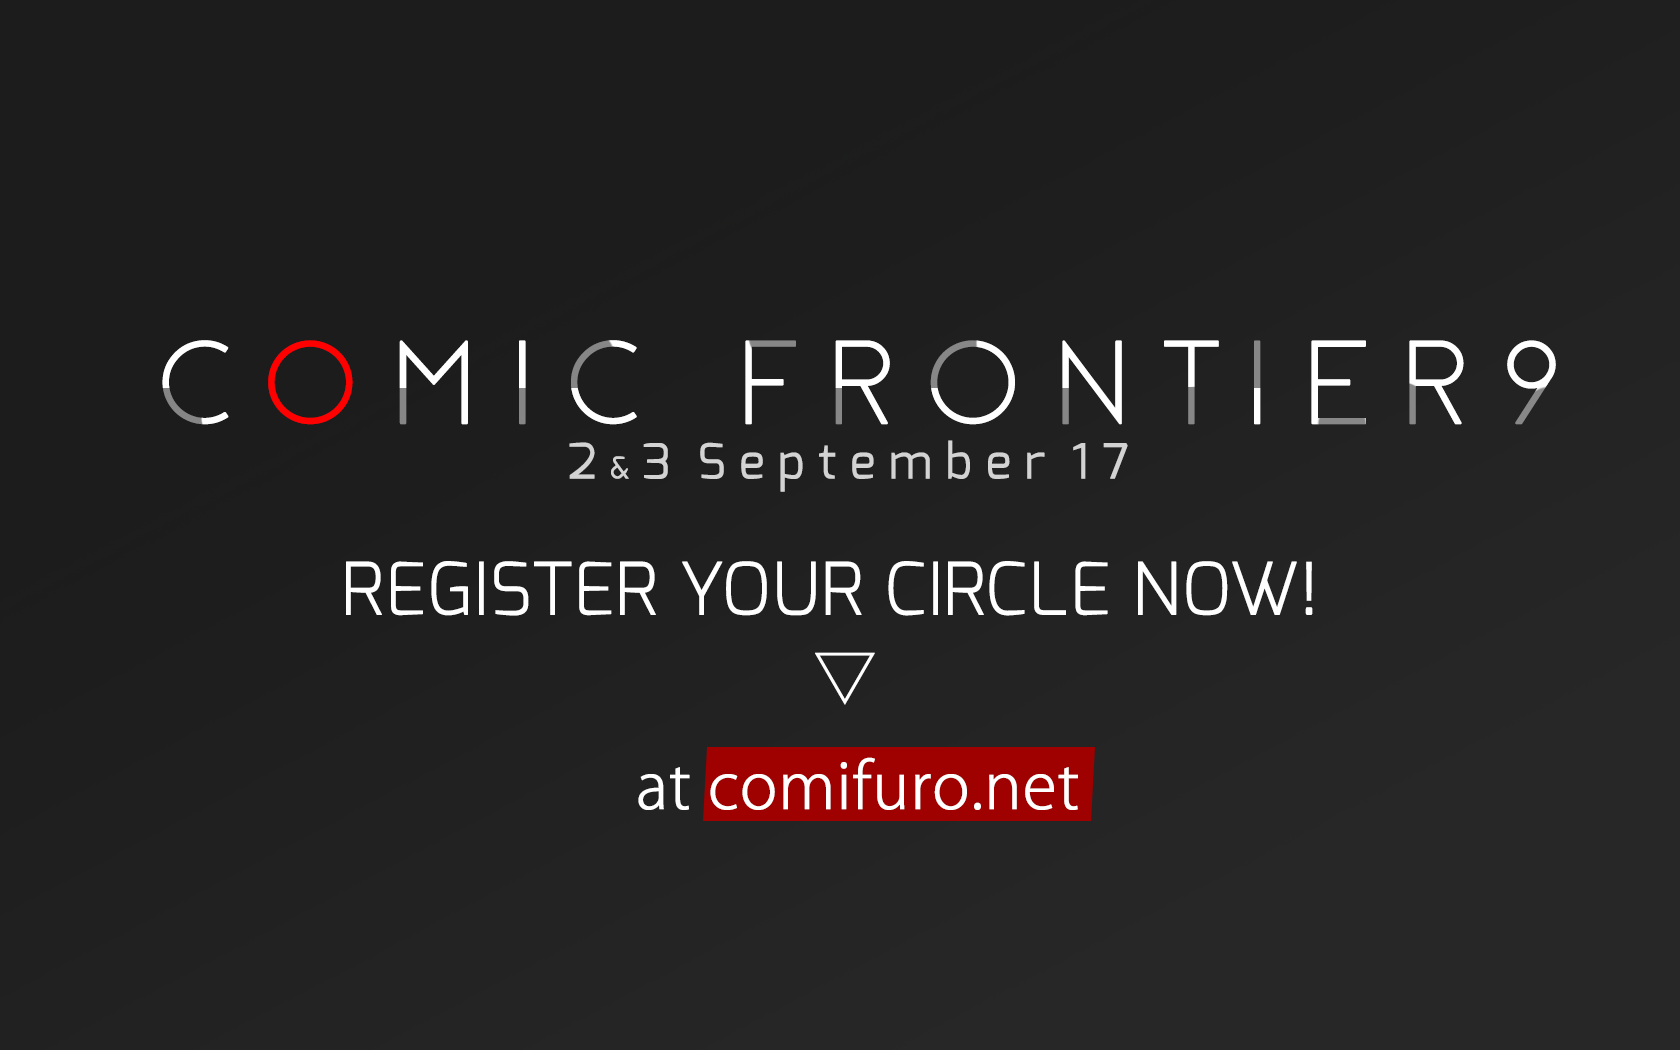 Comic Frontier 9 Circle Registration Open!